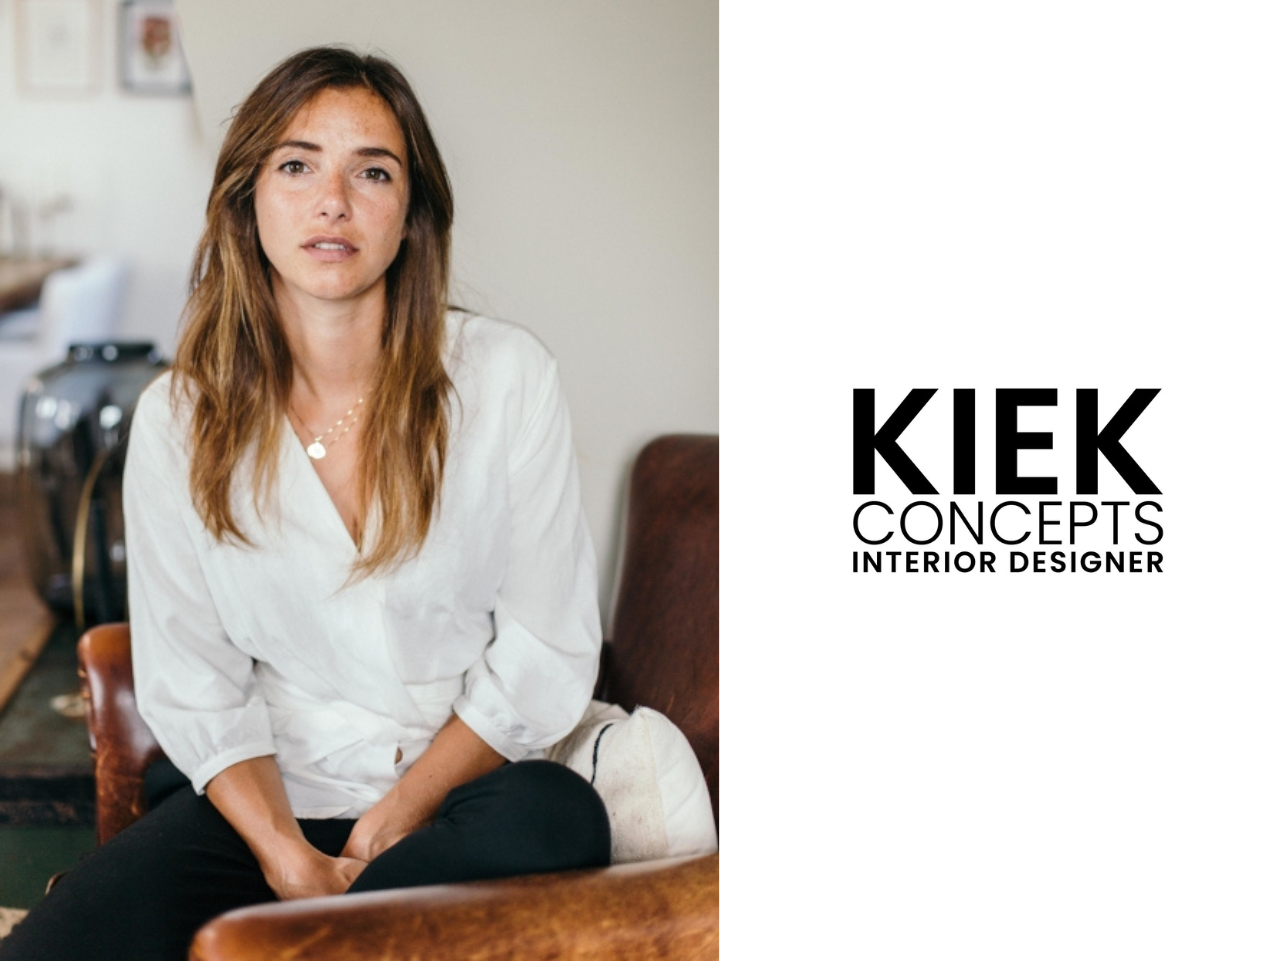 Kiek Concepts Interior Designer